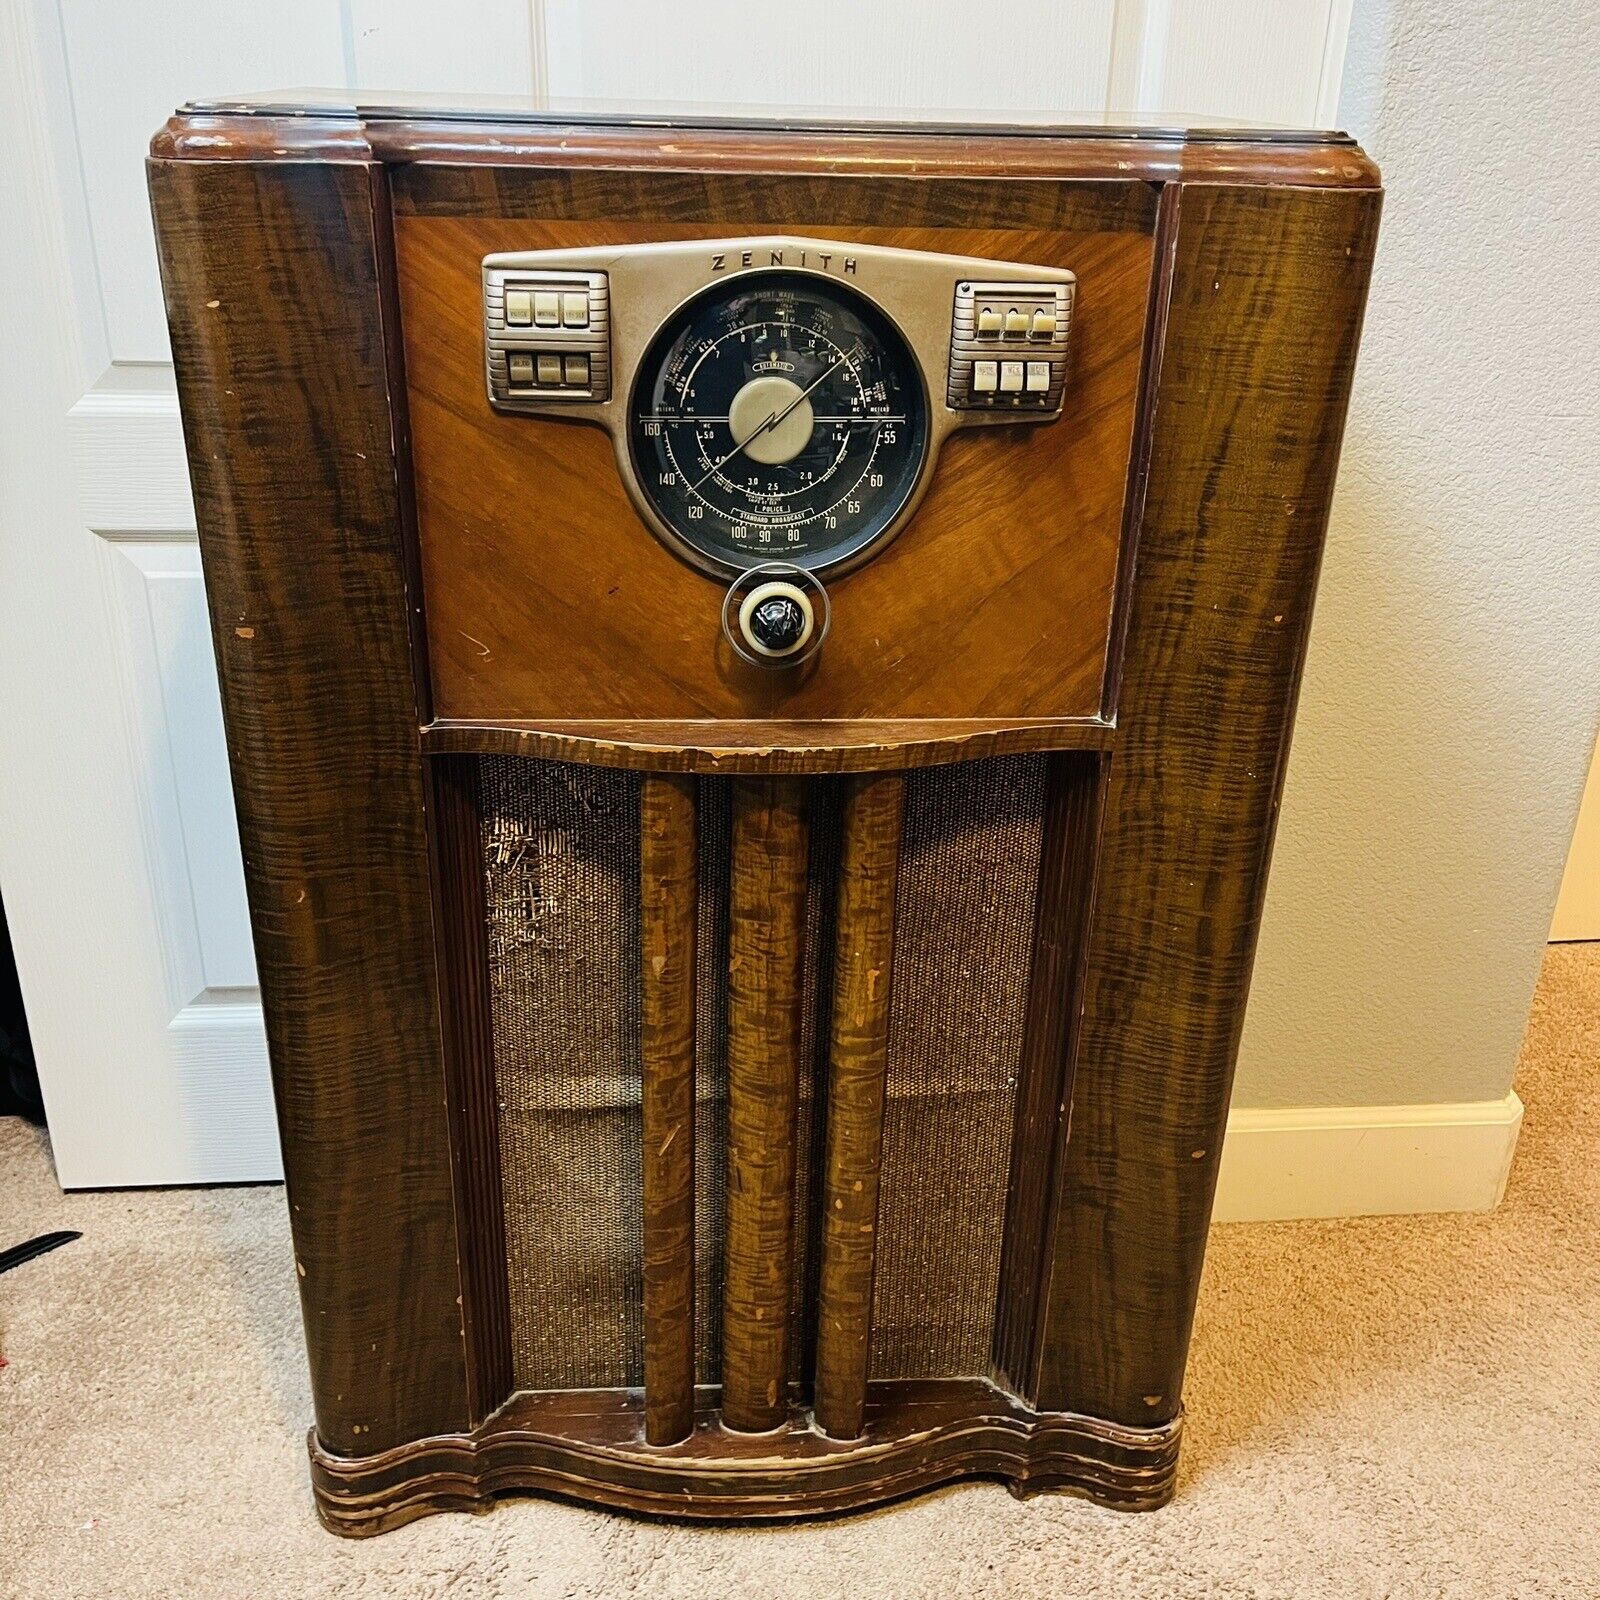 Zenith 10S567 wood tube console radio 1941 Antique Still Turns On